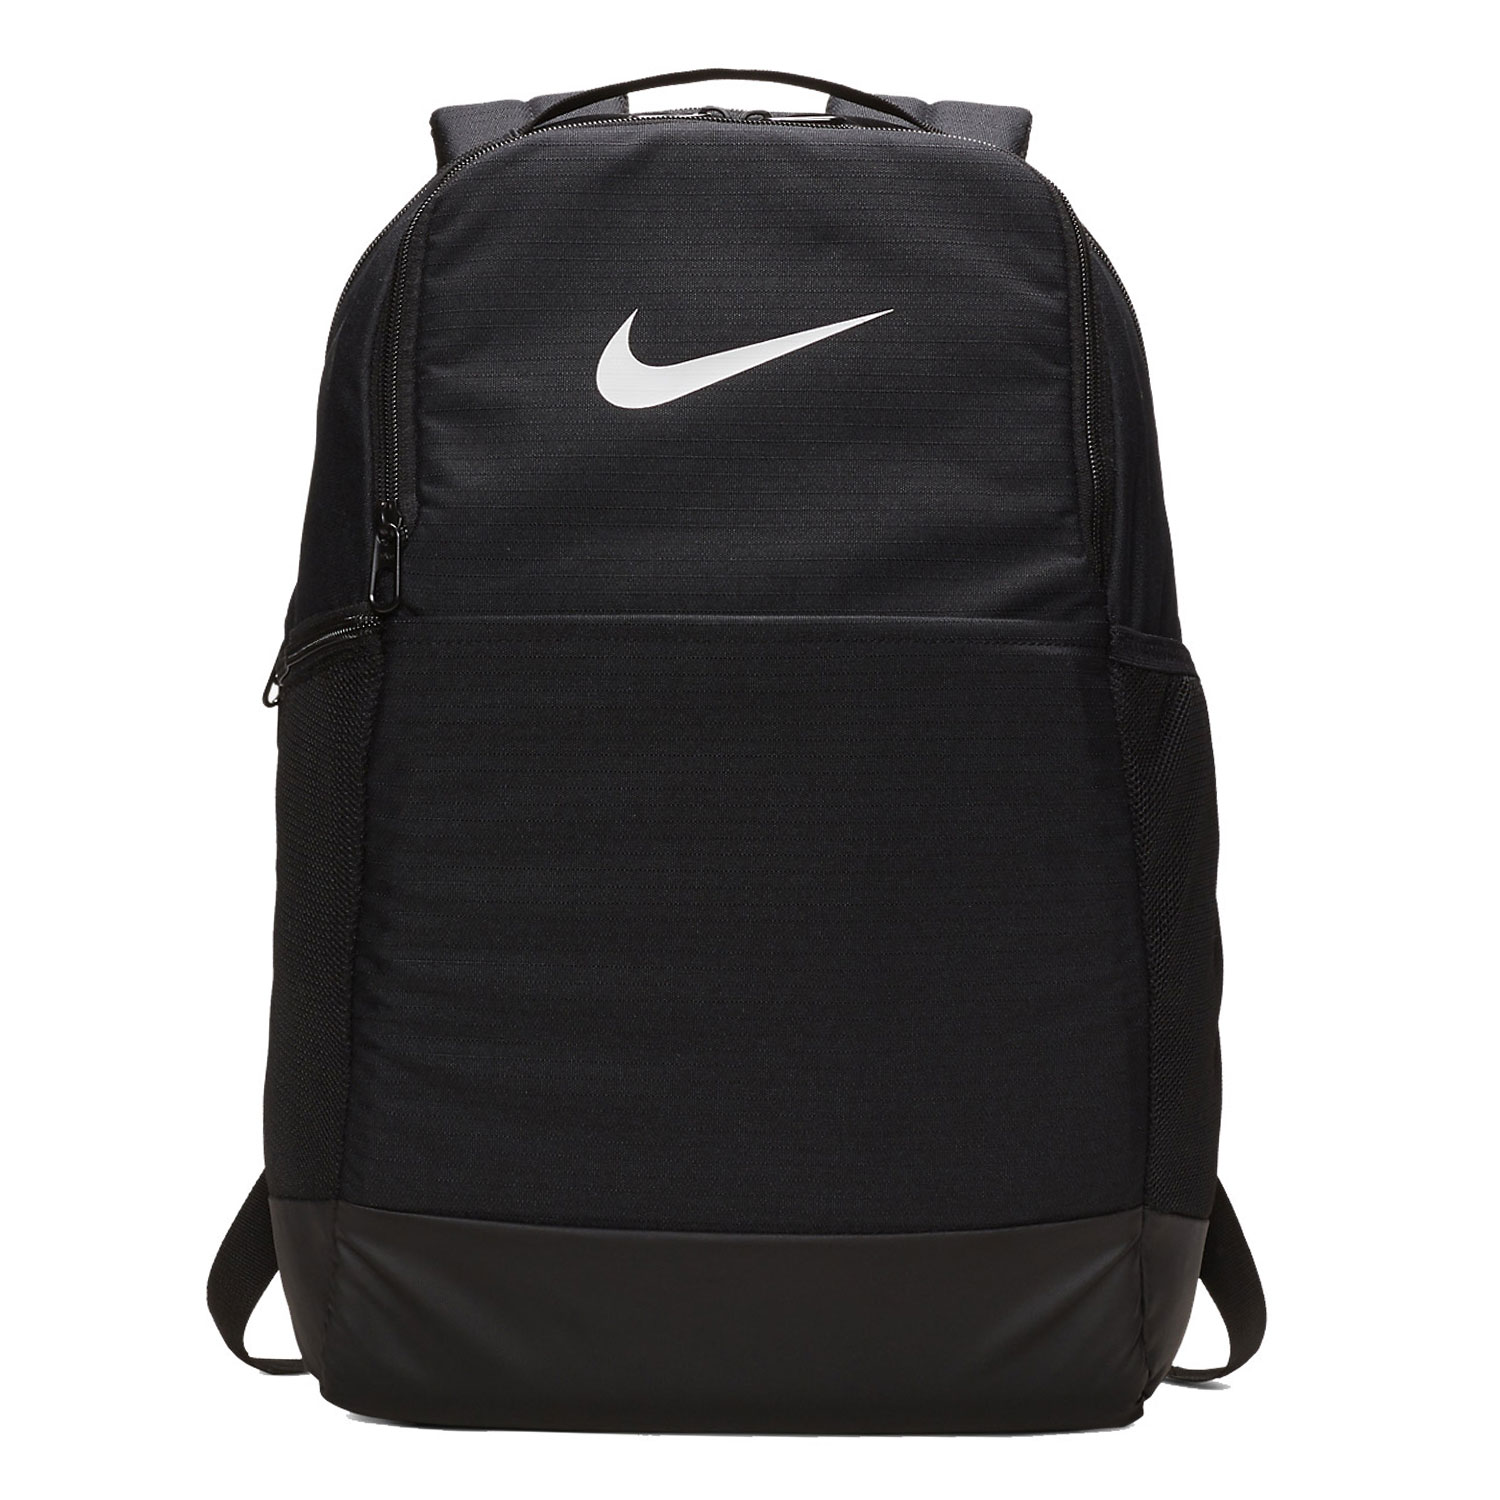 nike logo backpack in black